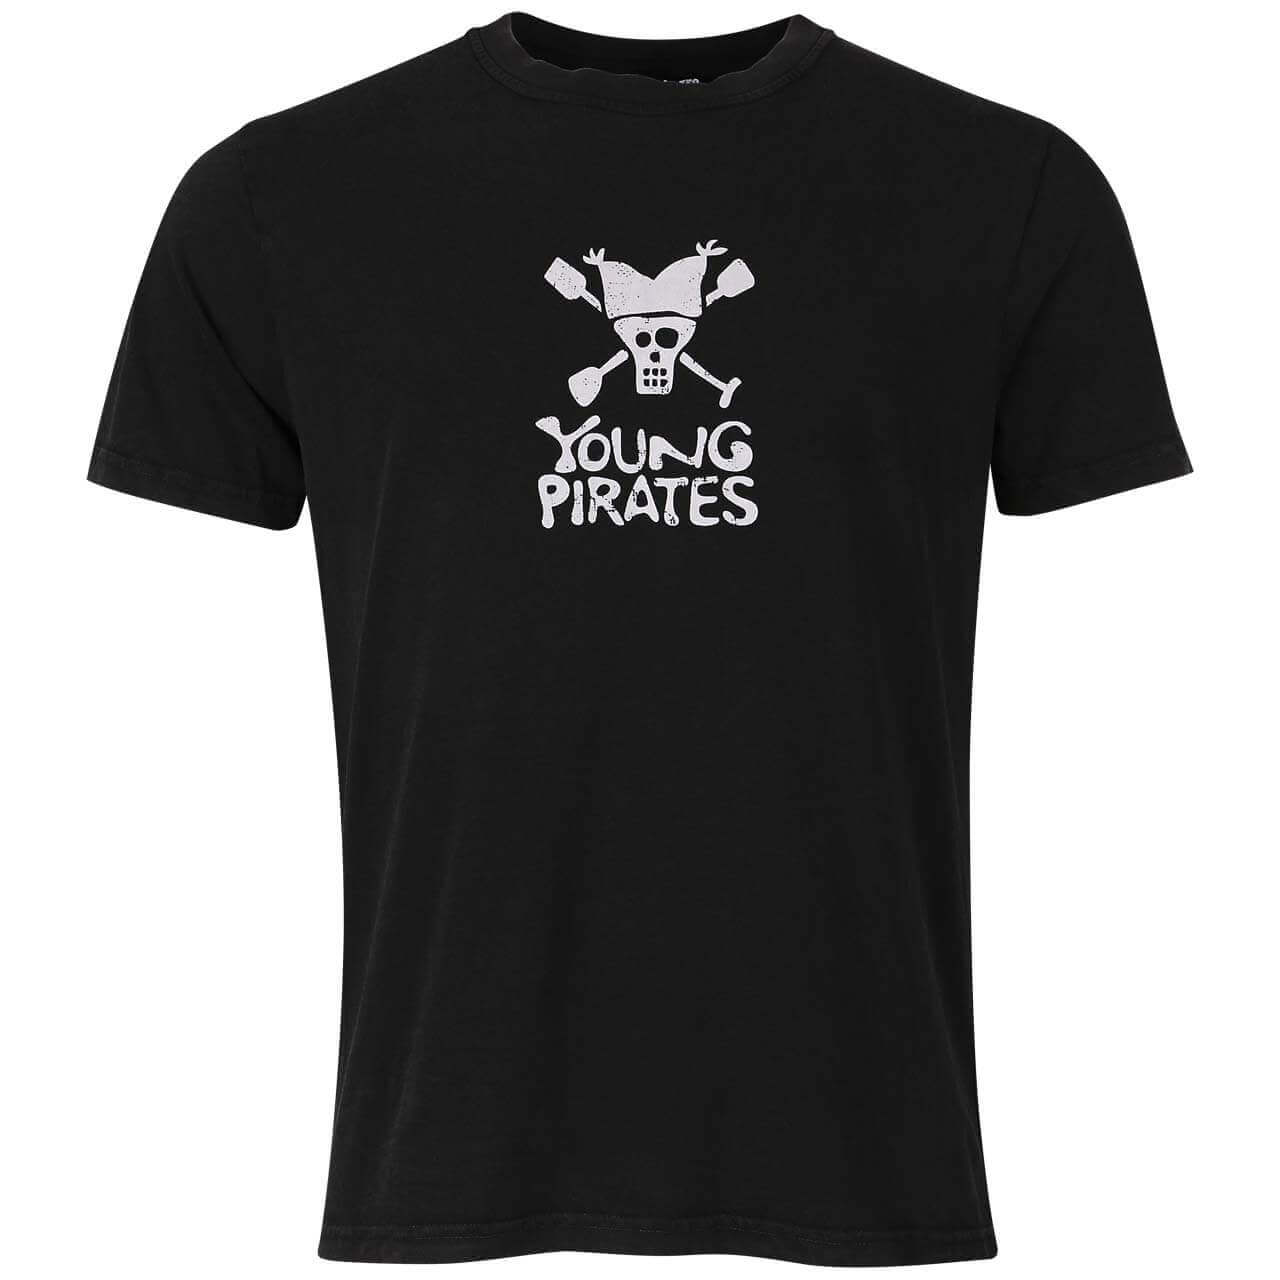 Young Pirates Vintage Skull T-Shirt - Black, M